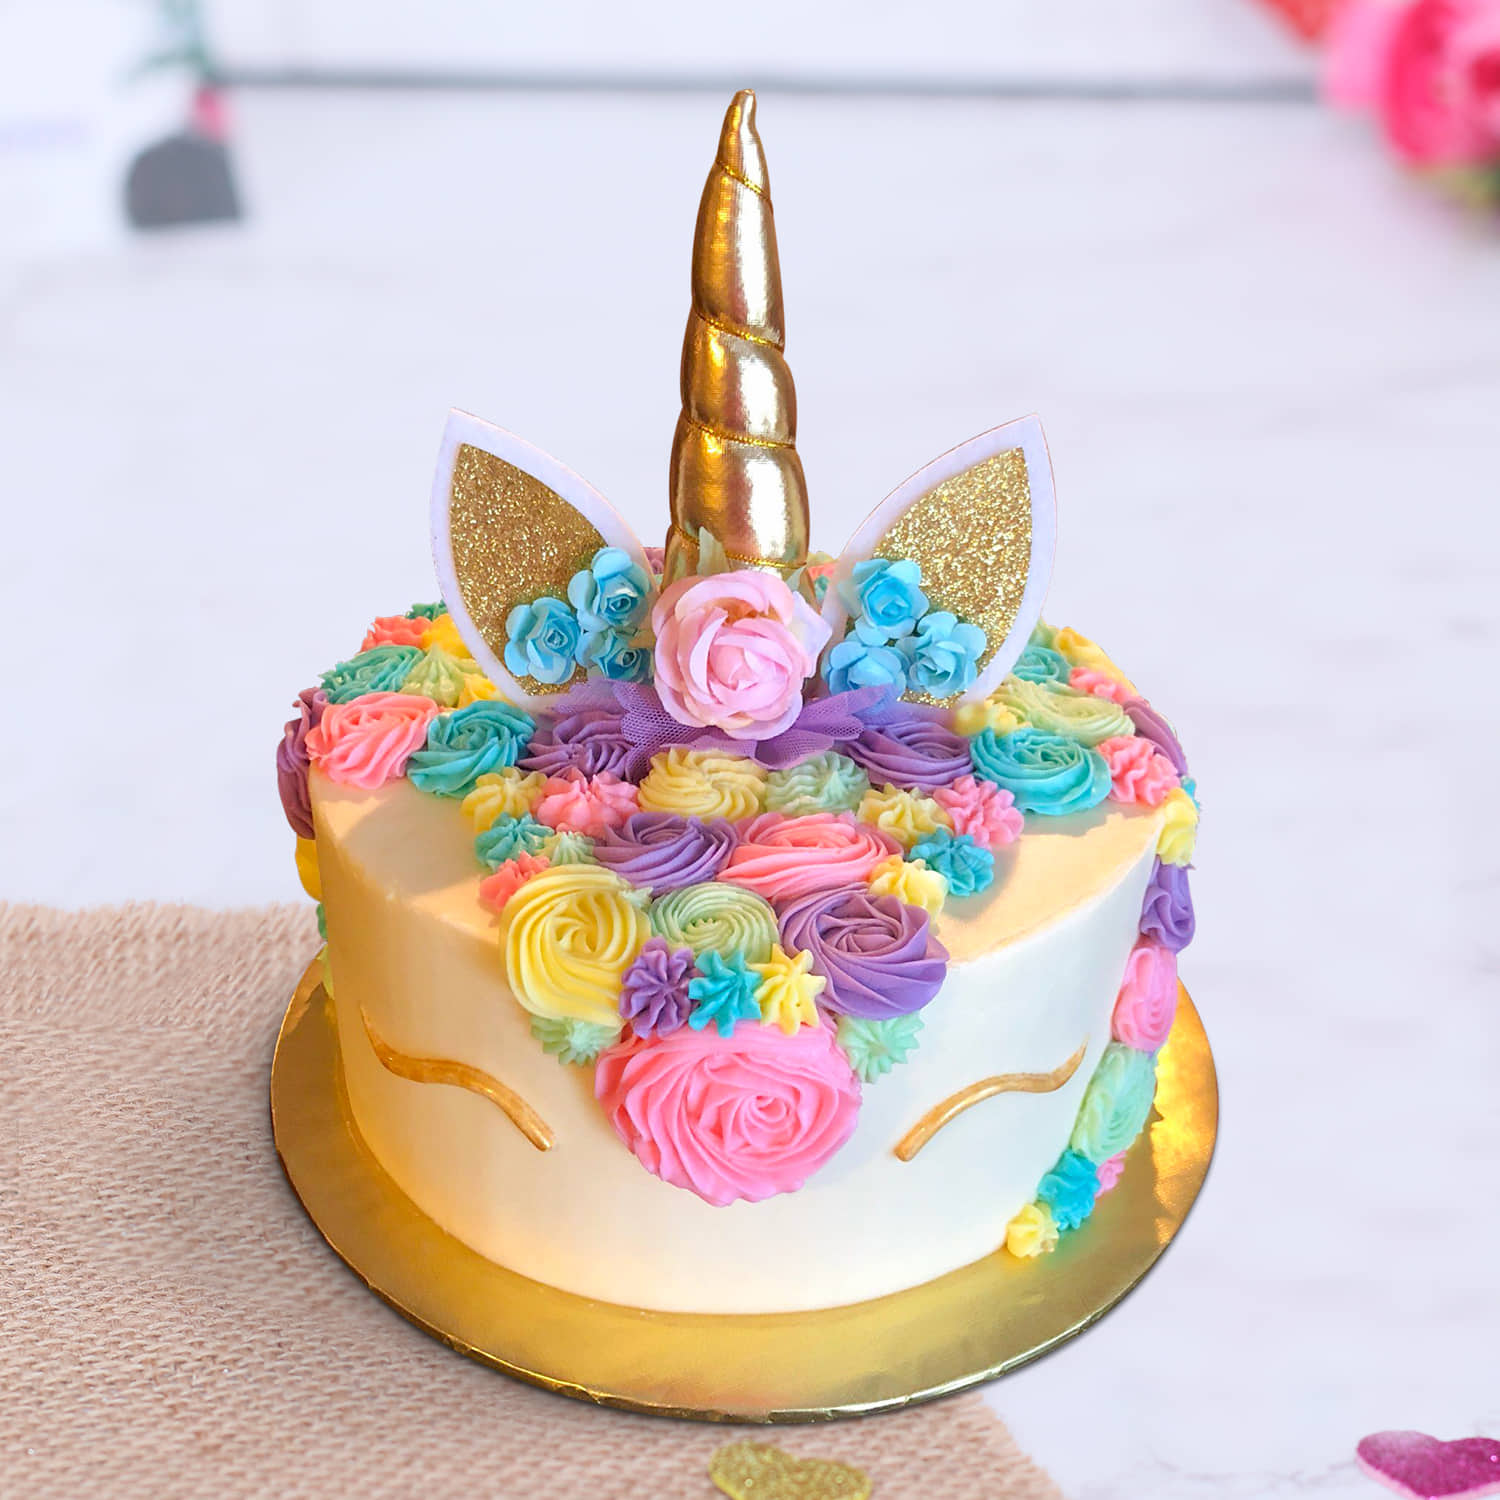 22 unicorn cake ideas to make at home | Mum's Grapevine